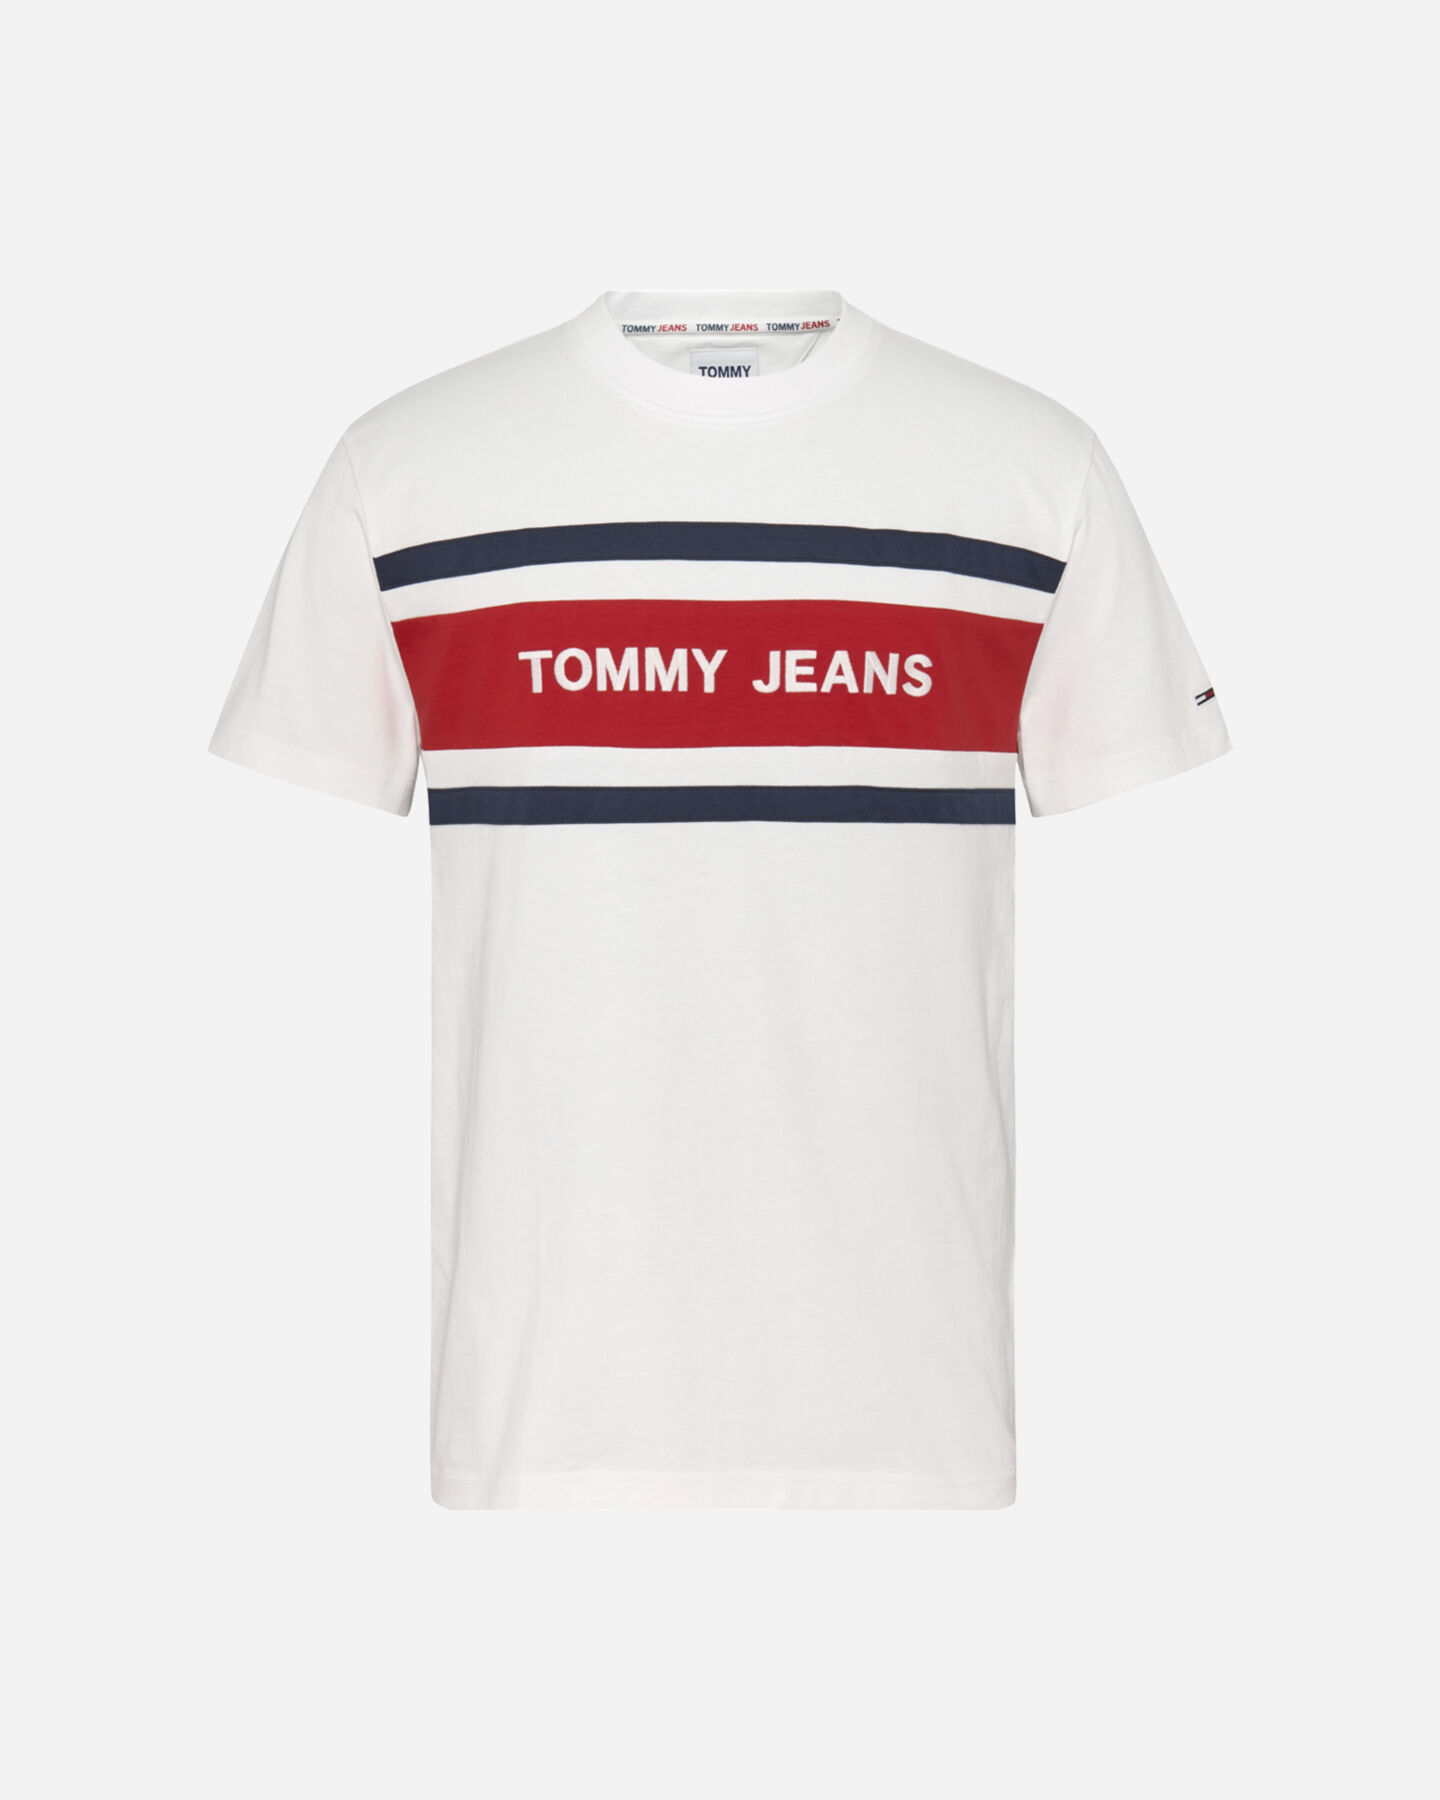  T-Shirt TOMMY HILFIGER LOGO STRIPES M S4112930|YBR|S scatto 0